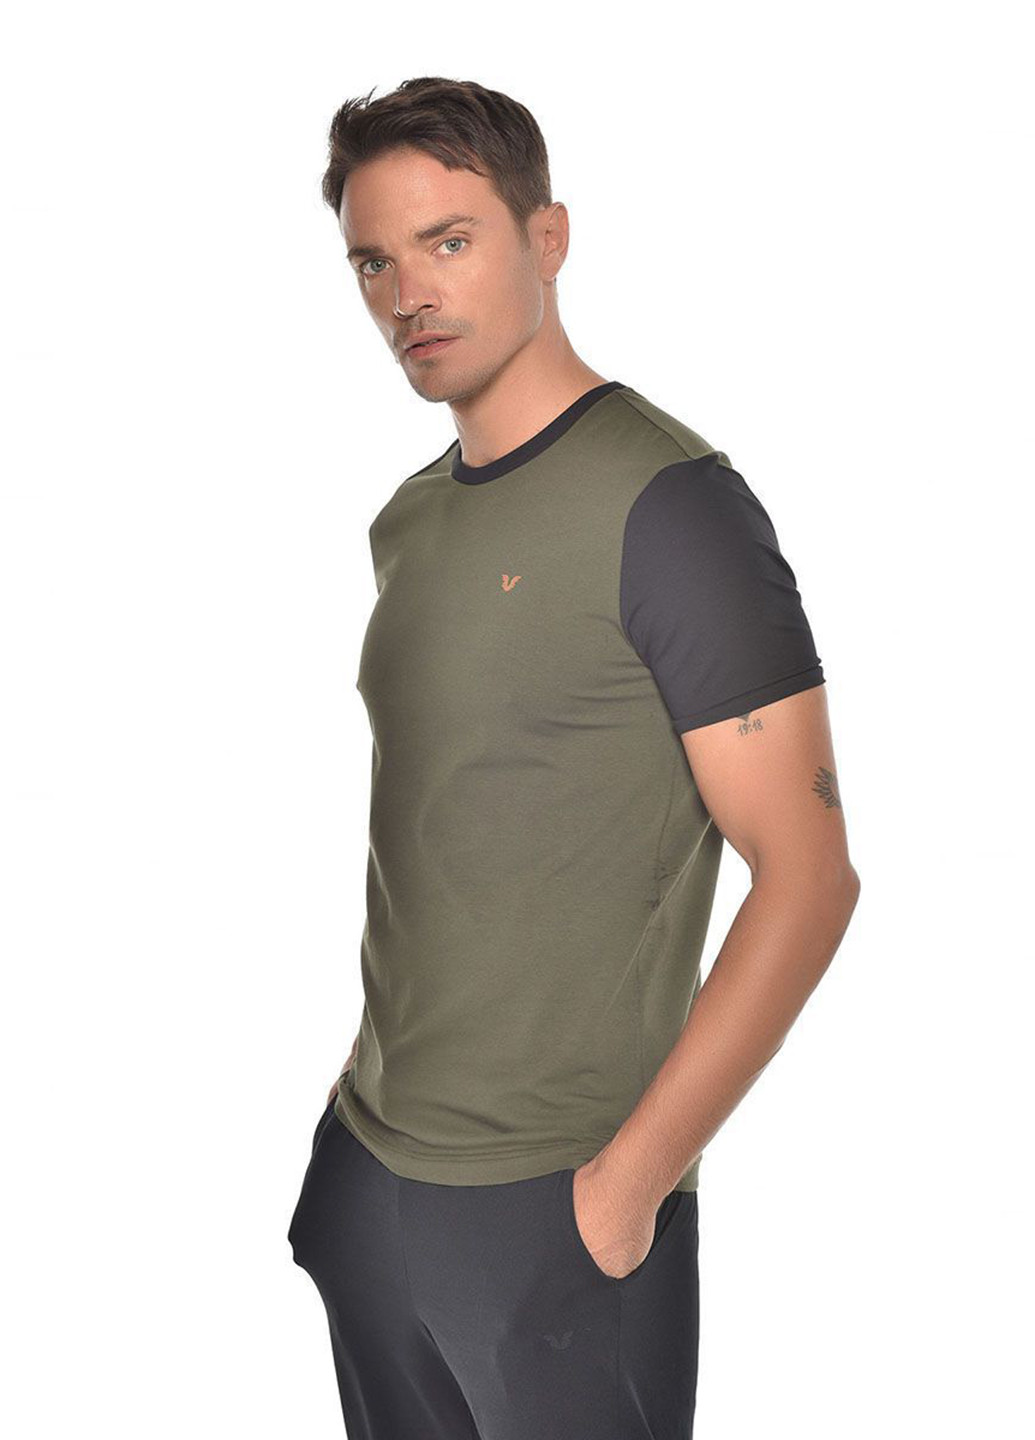 Хаки (оливковая) футболка Bilcee